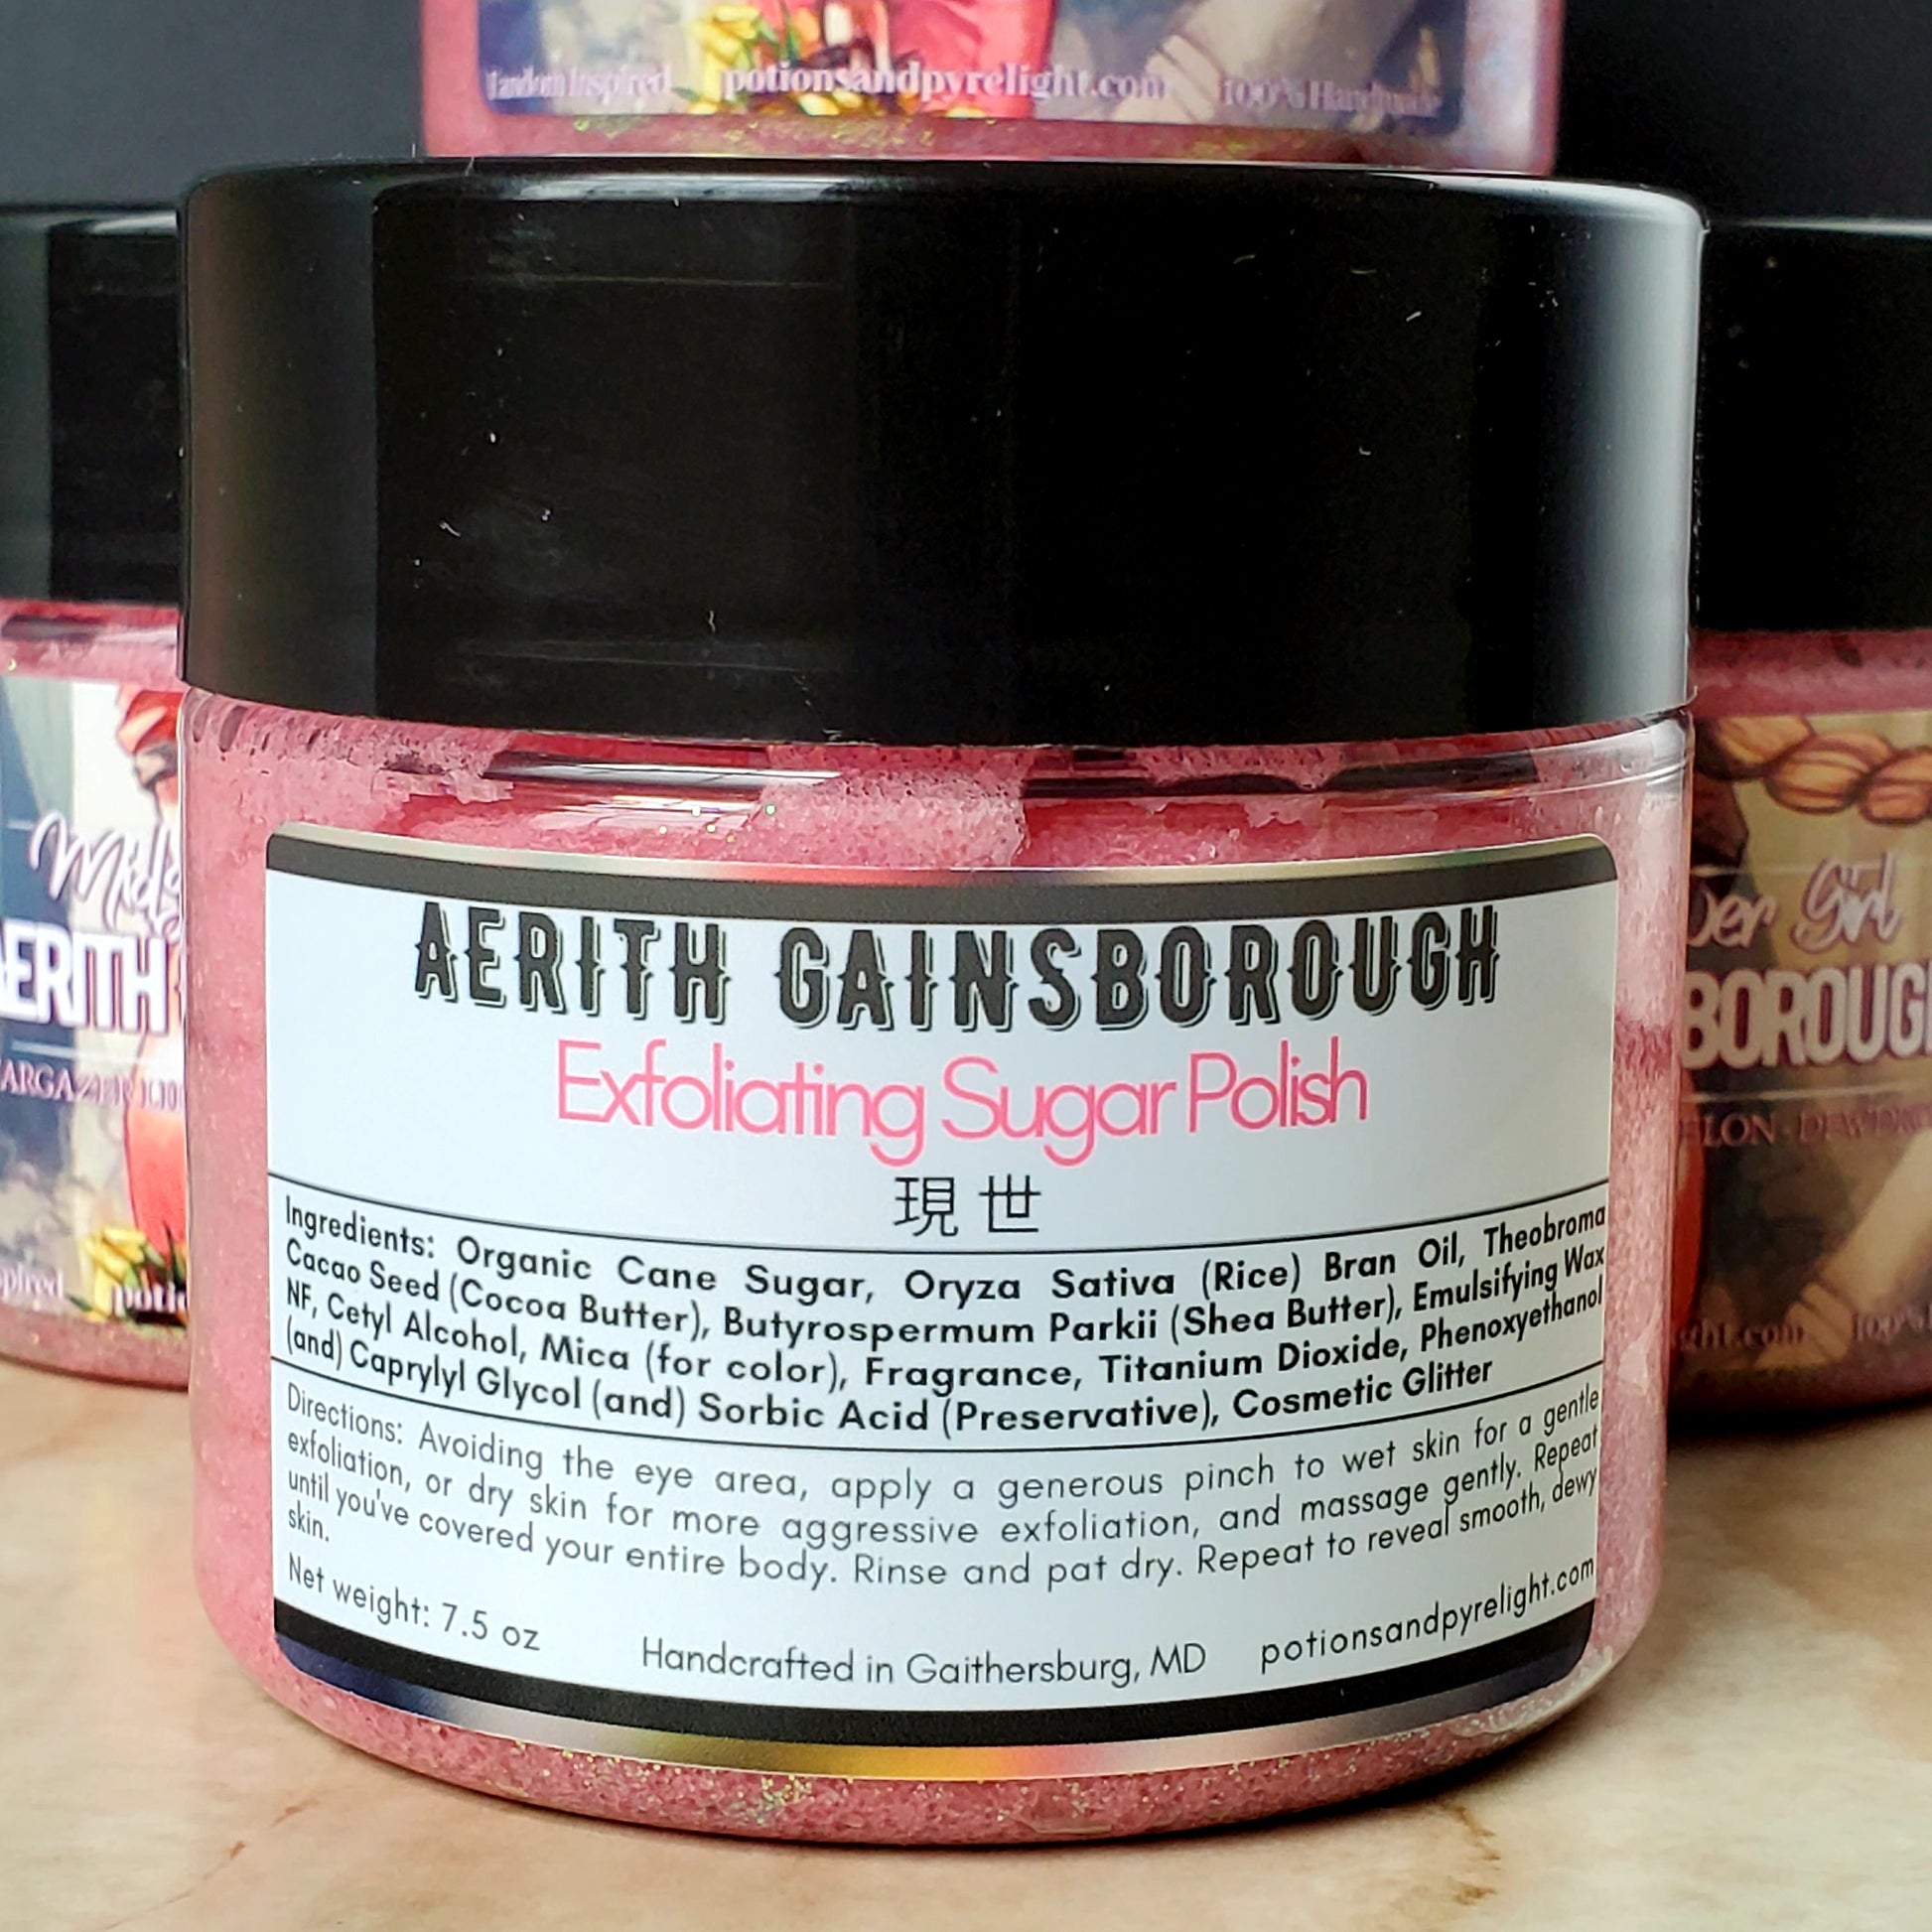 Aerith Gainsborough Exfoliating Sugar Polish - Potions & Pyrelight